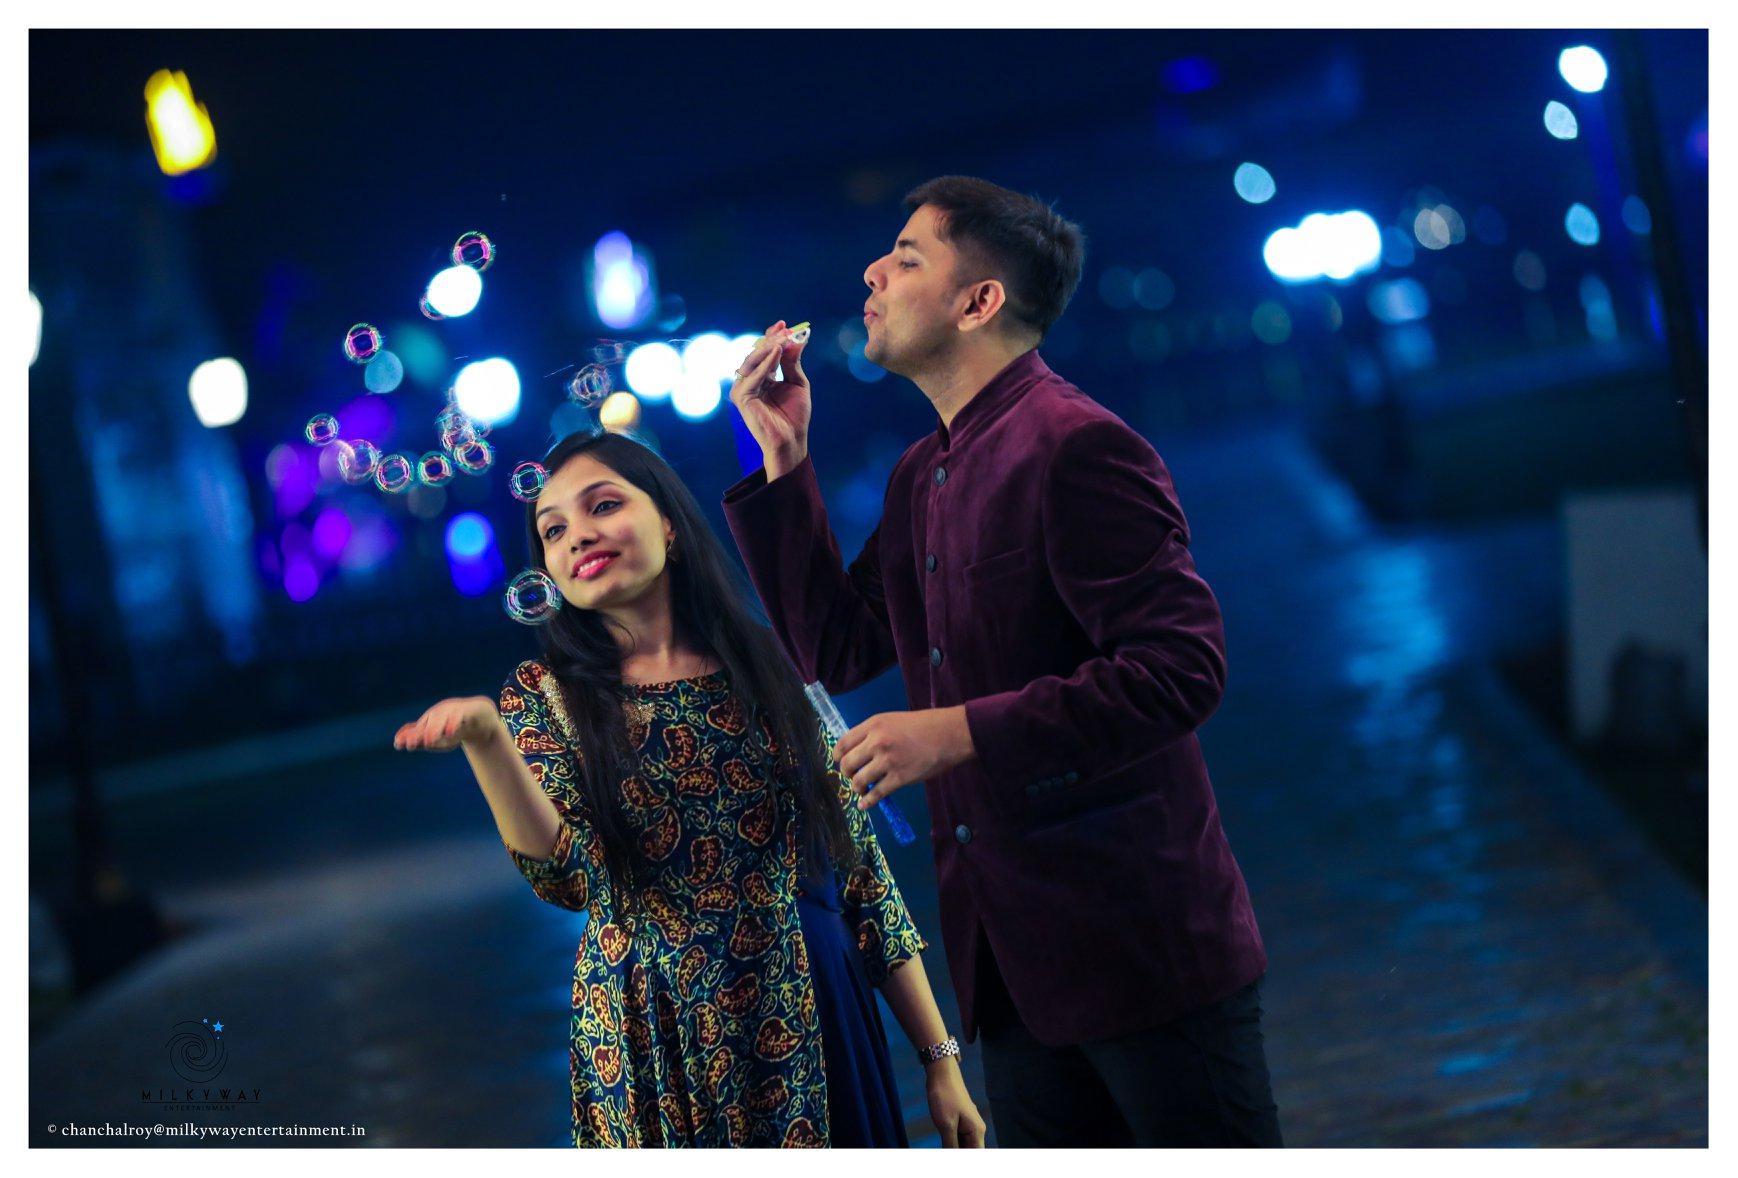 Milkyway Entertainment Wedding Photographer, Kolkata